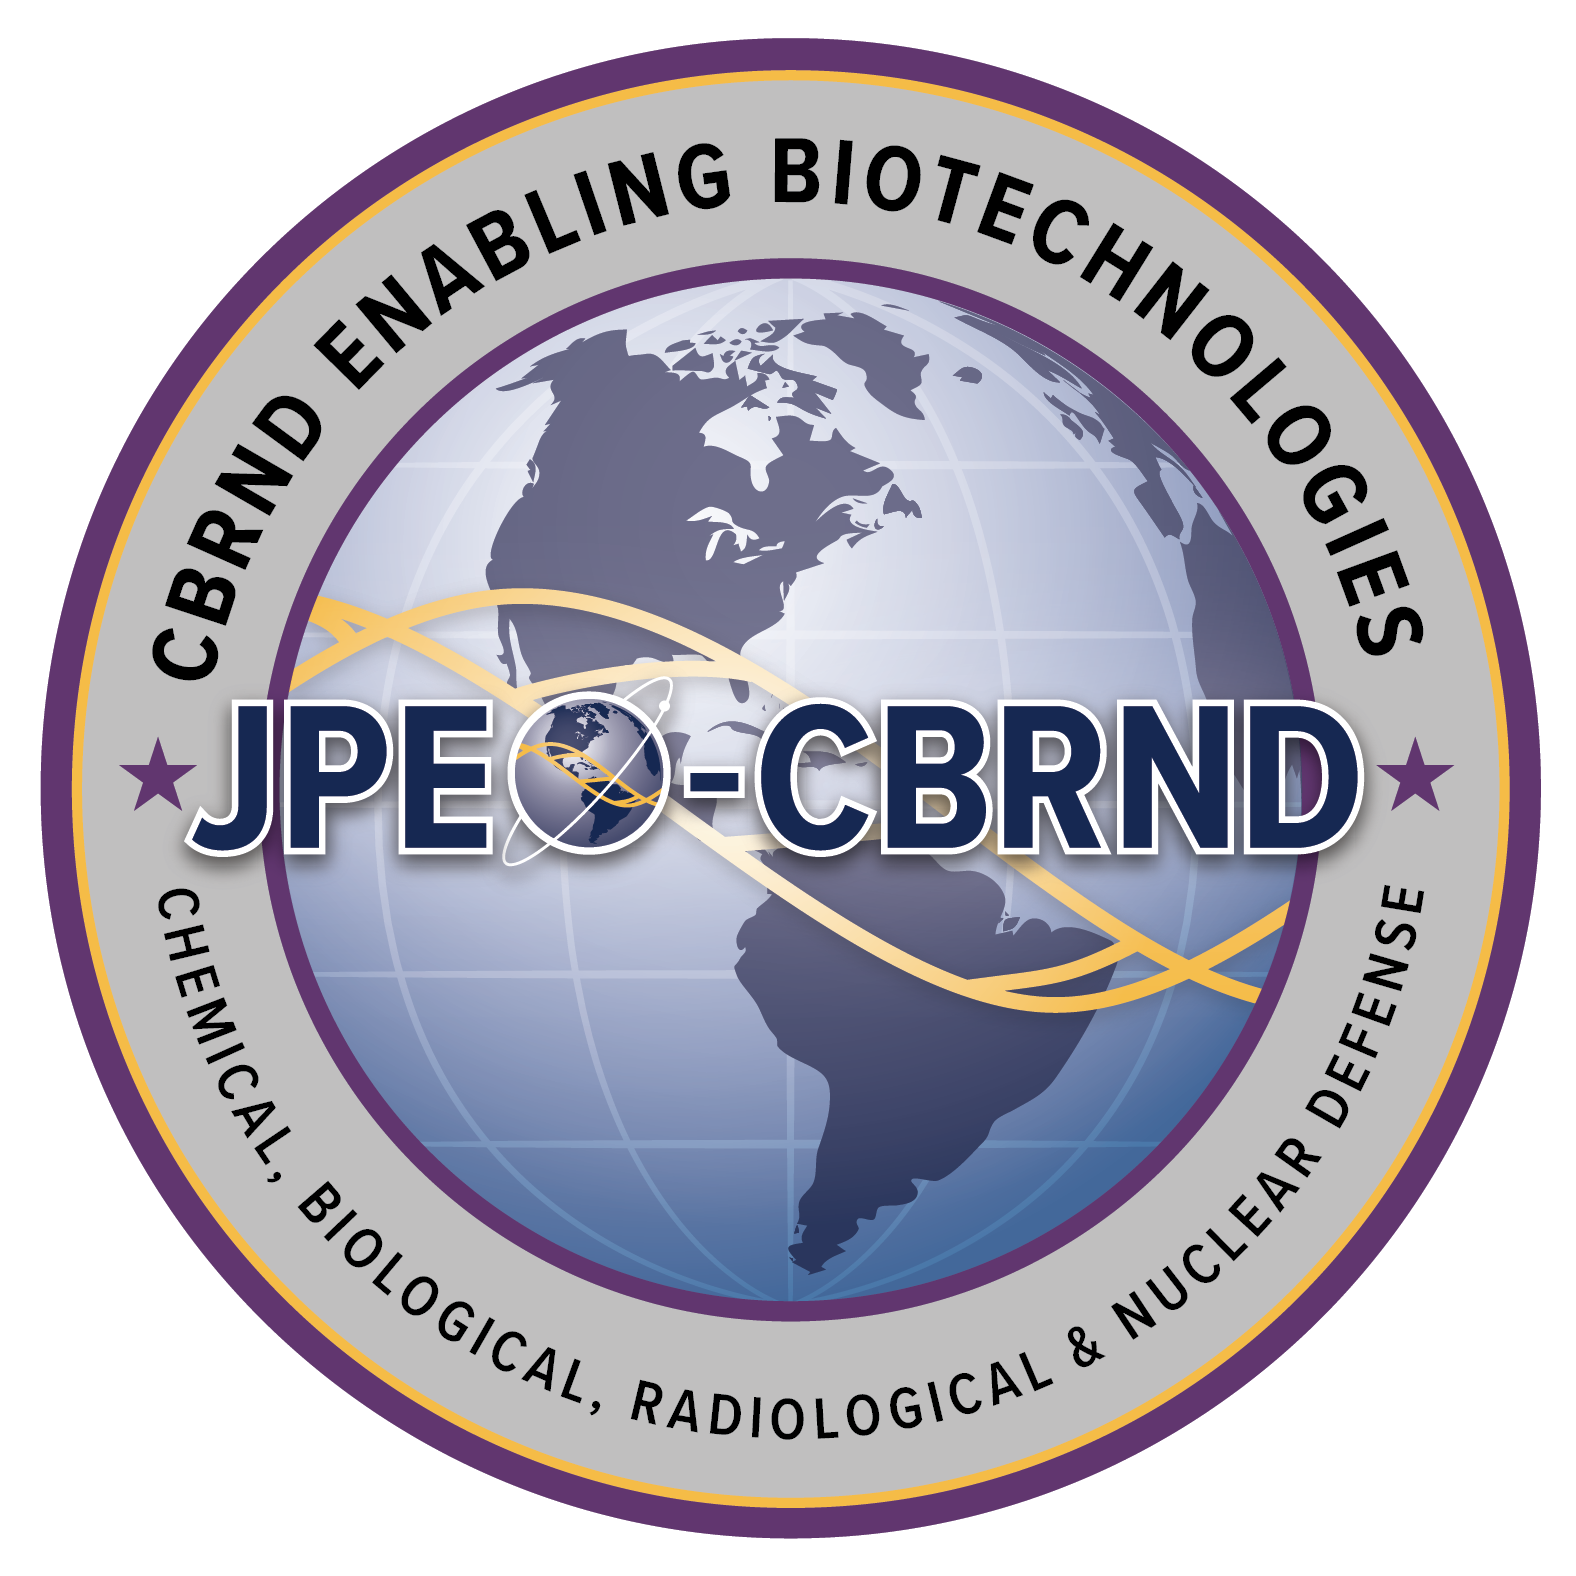 Joint Project Lead CBRN Defense Enabling Biotechnologies